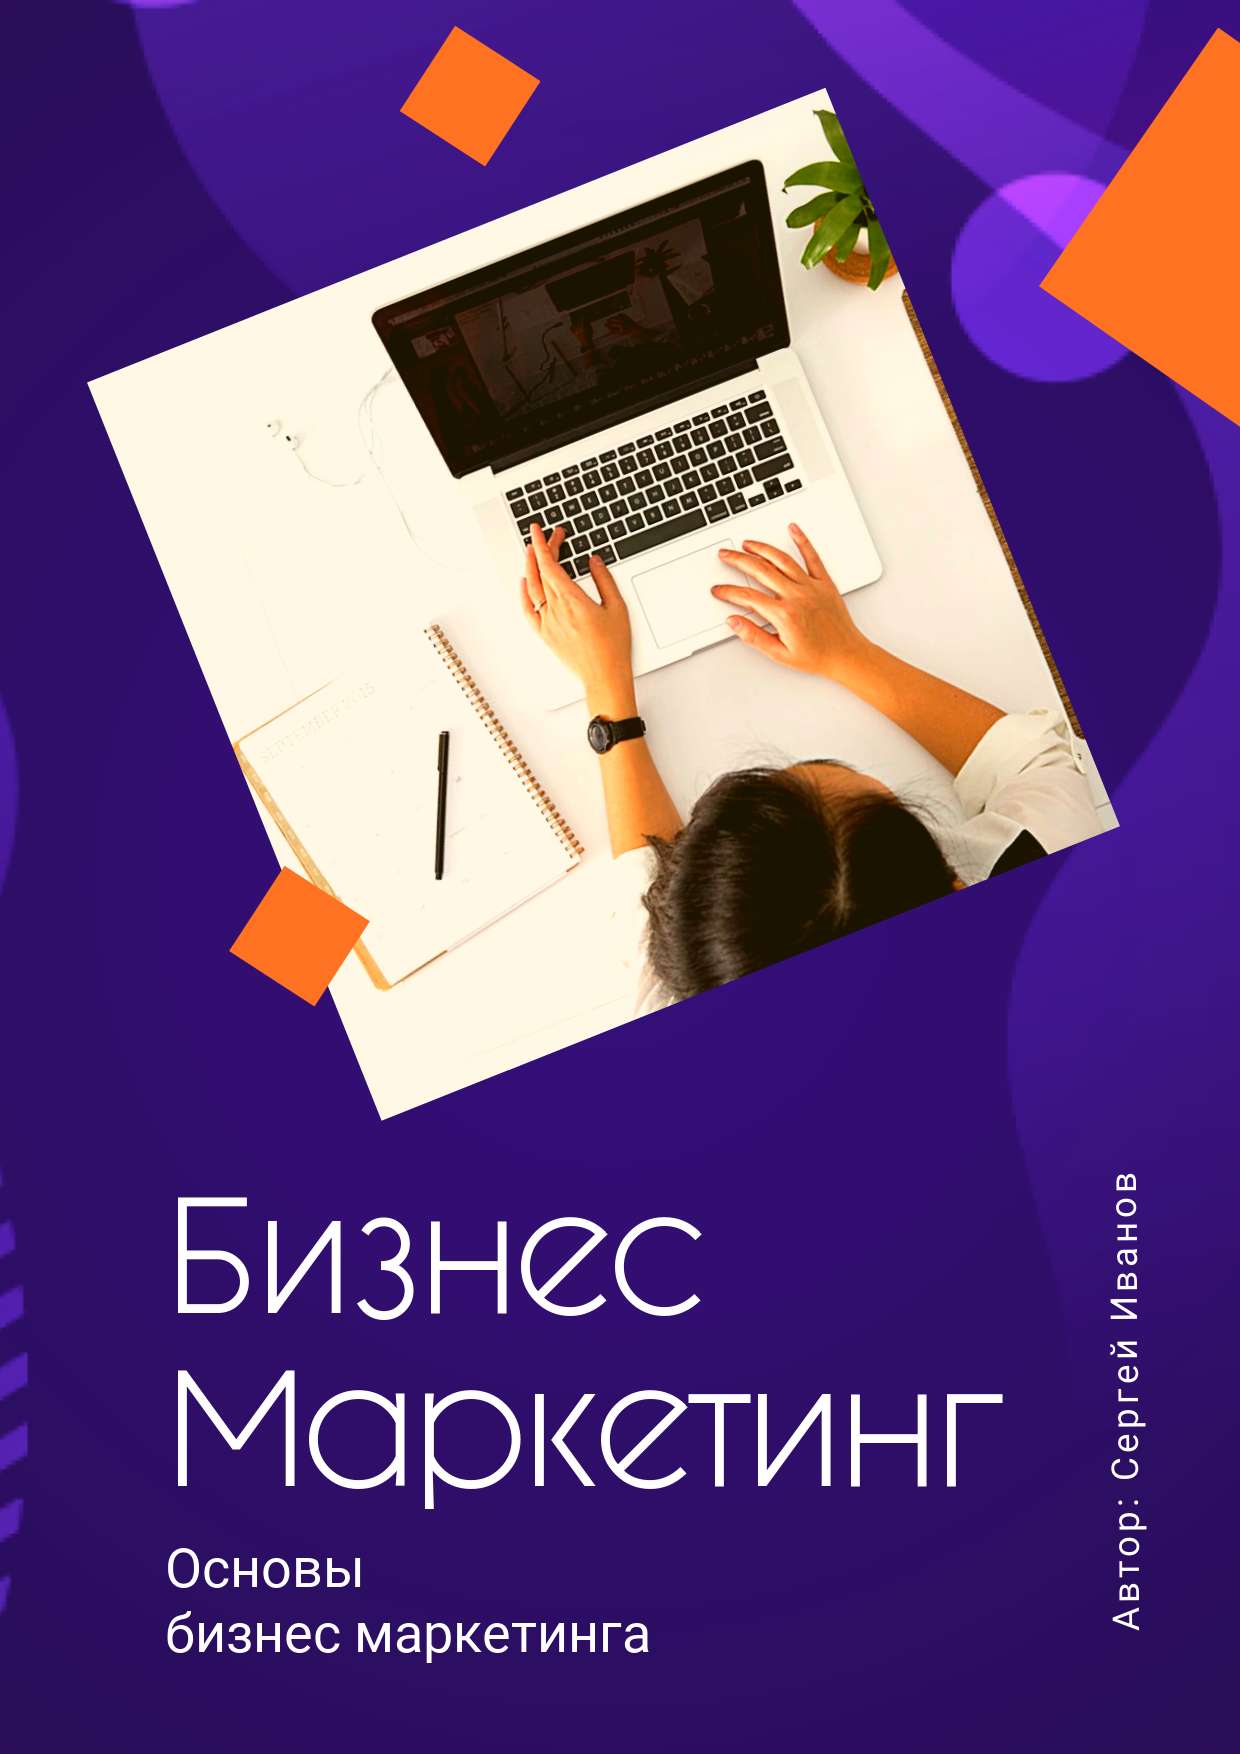 Темная фиолетовая обложка для презентации на тему маркетинга с фото и геометрическими фигурами